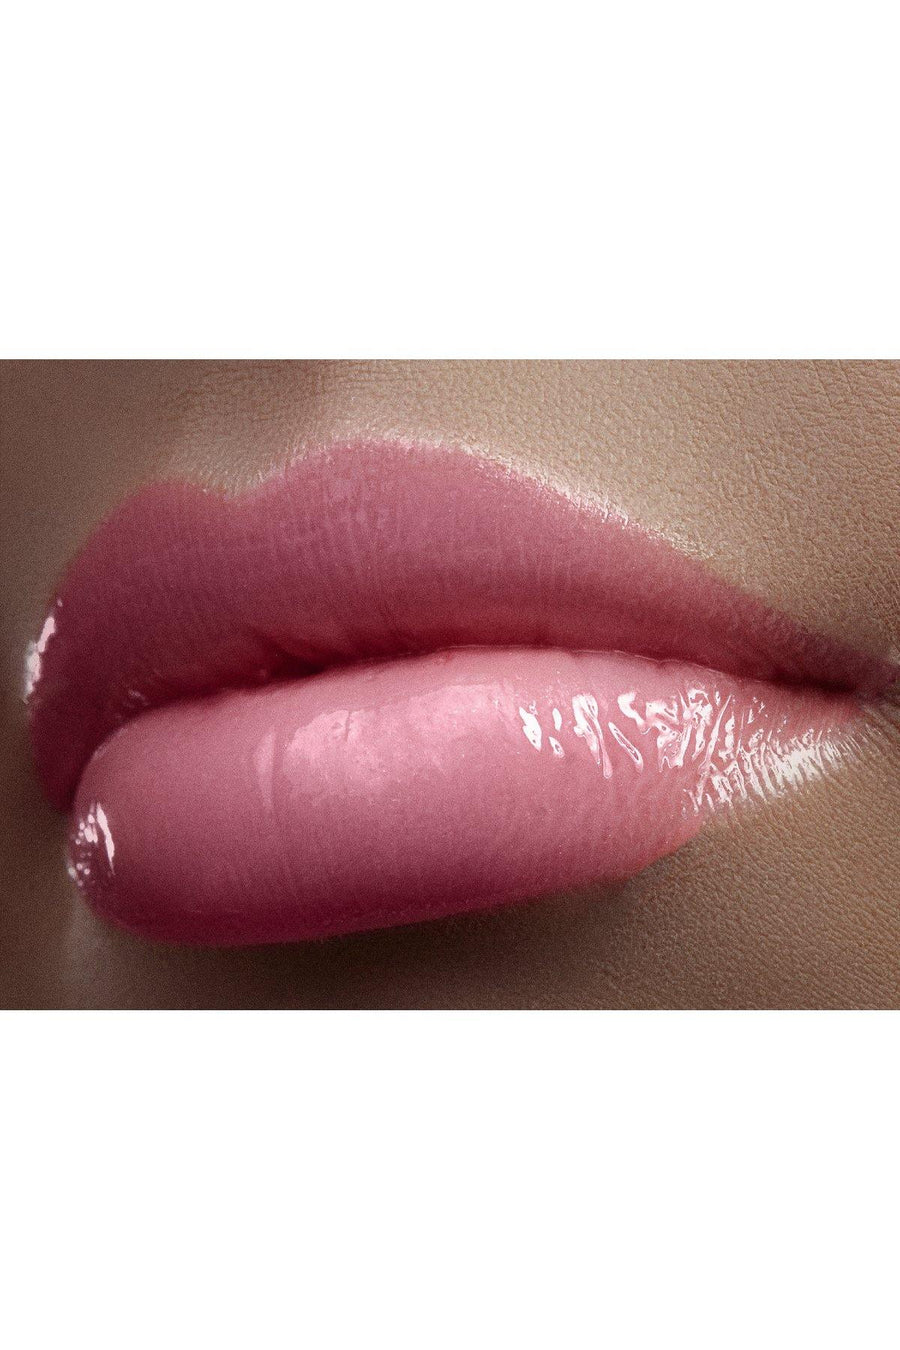 Lip Gloss G6 - Flamingo - Blend Mineral Cosmetics